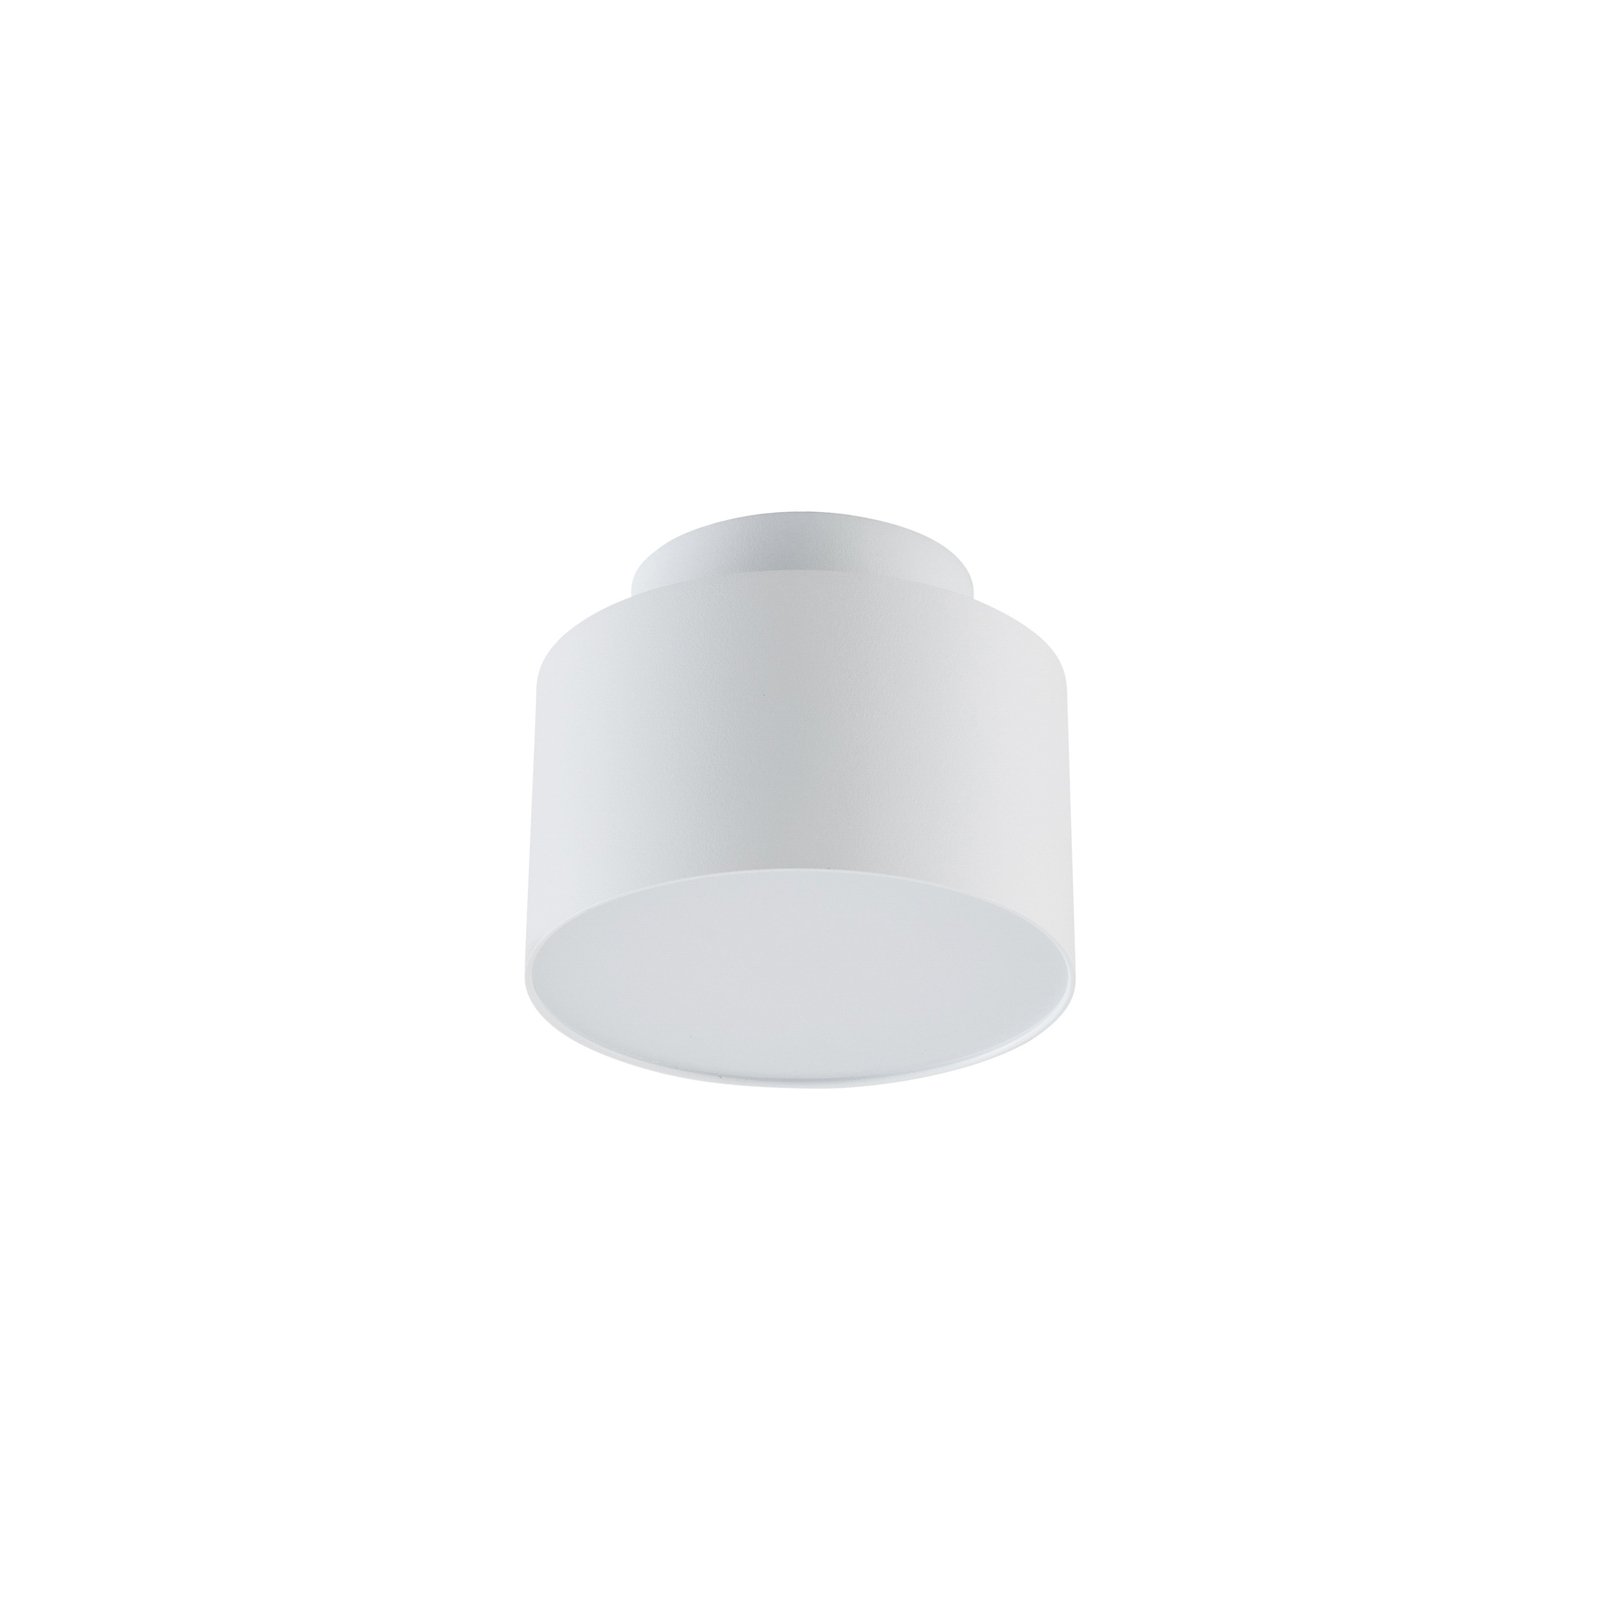 Lindby LED spotlight Nivoria, Ø 11 cm, sand white, set of 4